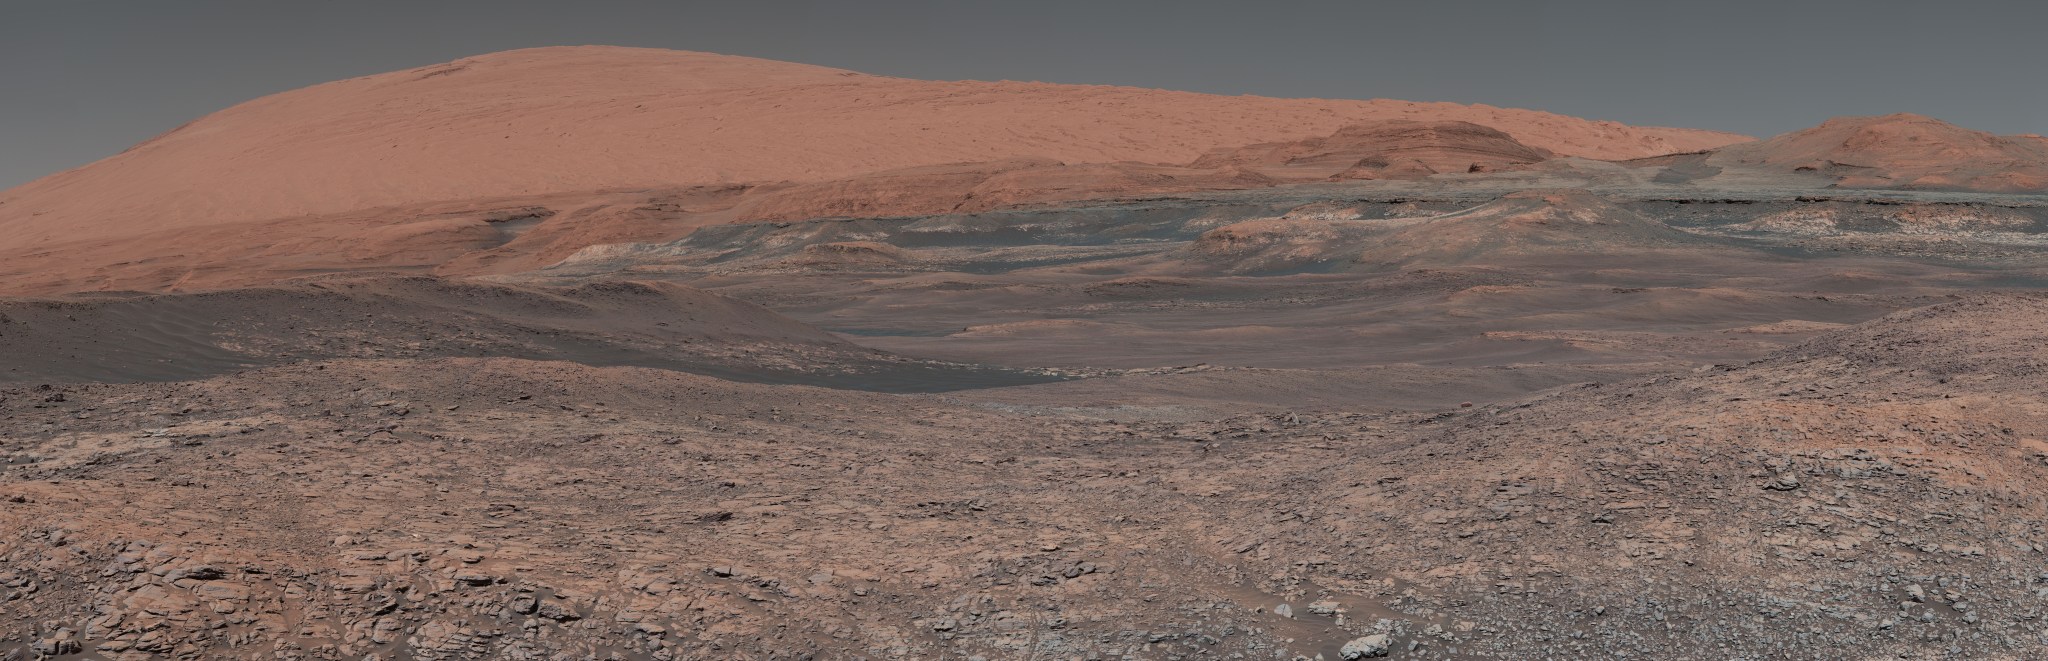 A mosaic image of Mars